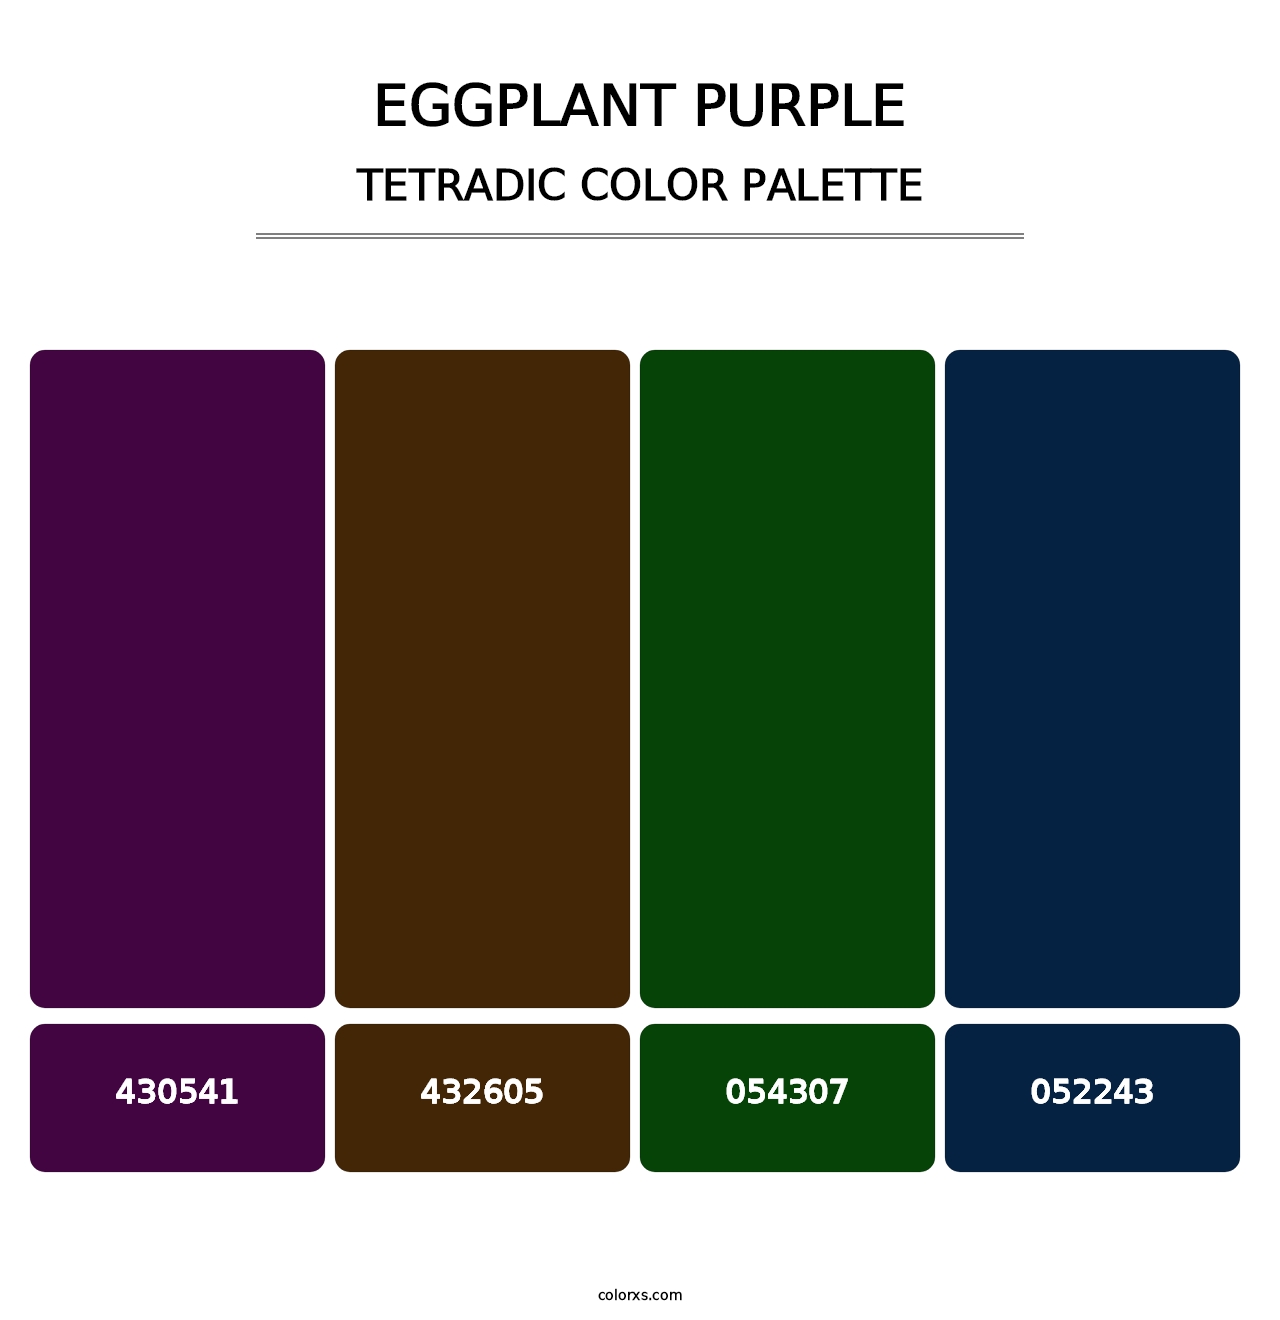 Eggplant Purple - Tetradic Color Palette